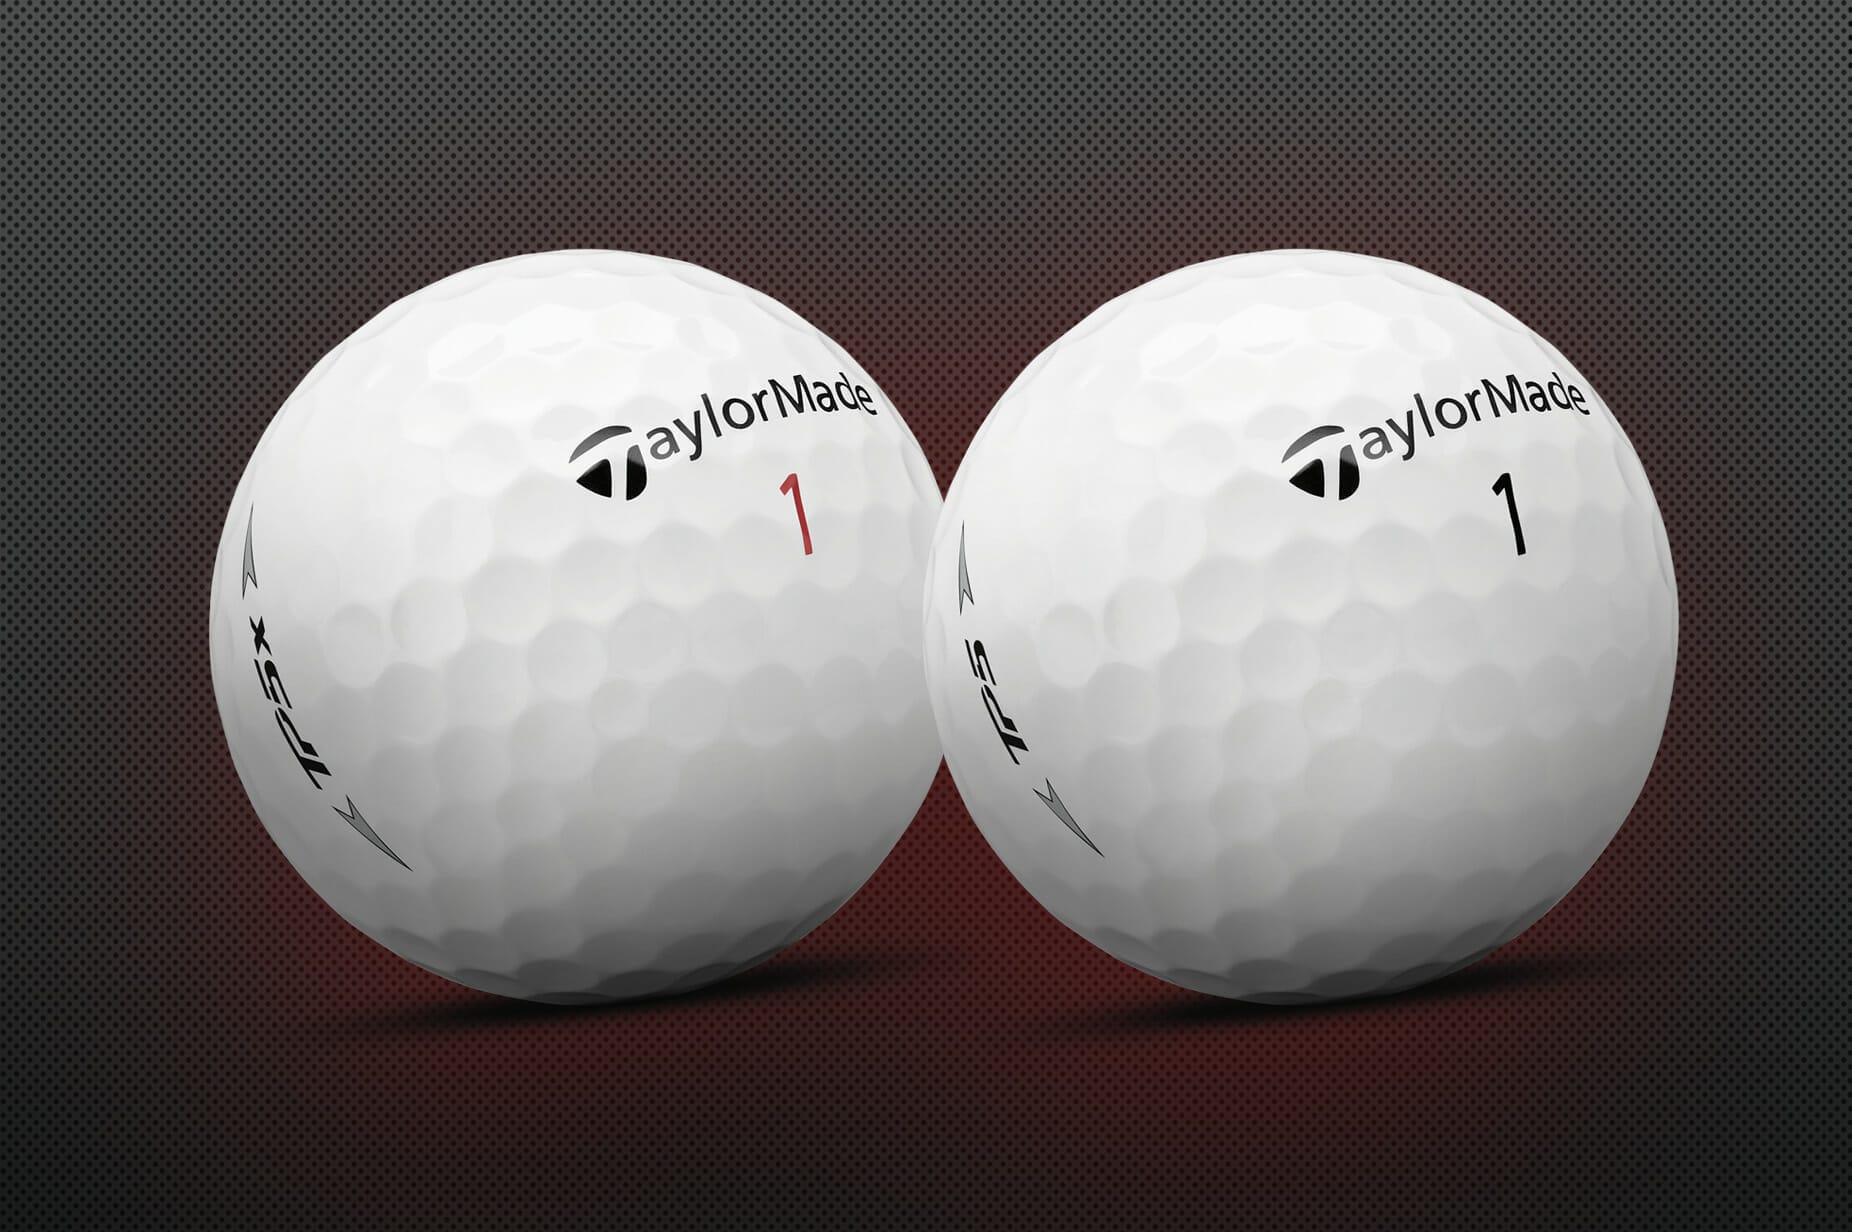 TaylorMade unveil new 2019 TP5 & TP5x Golf Balls